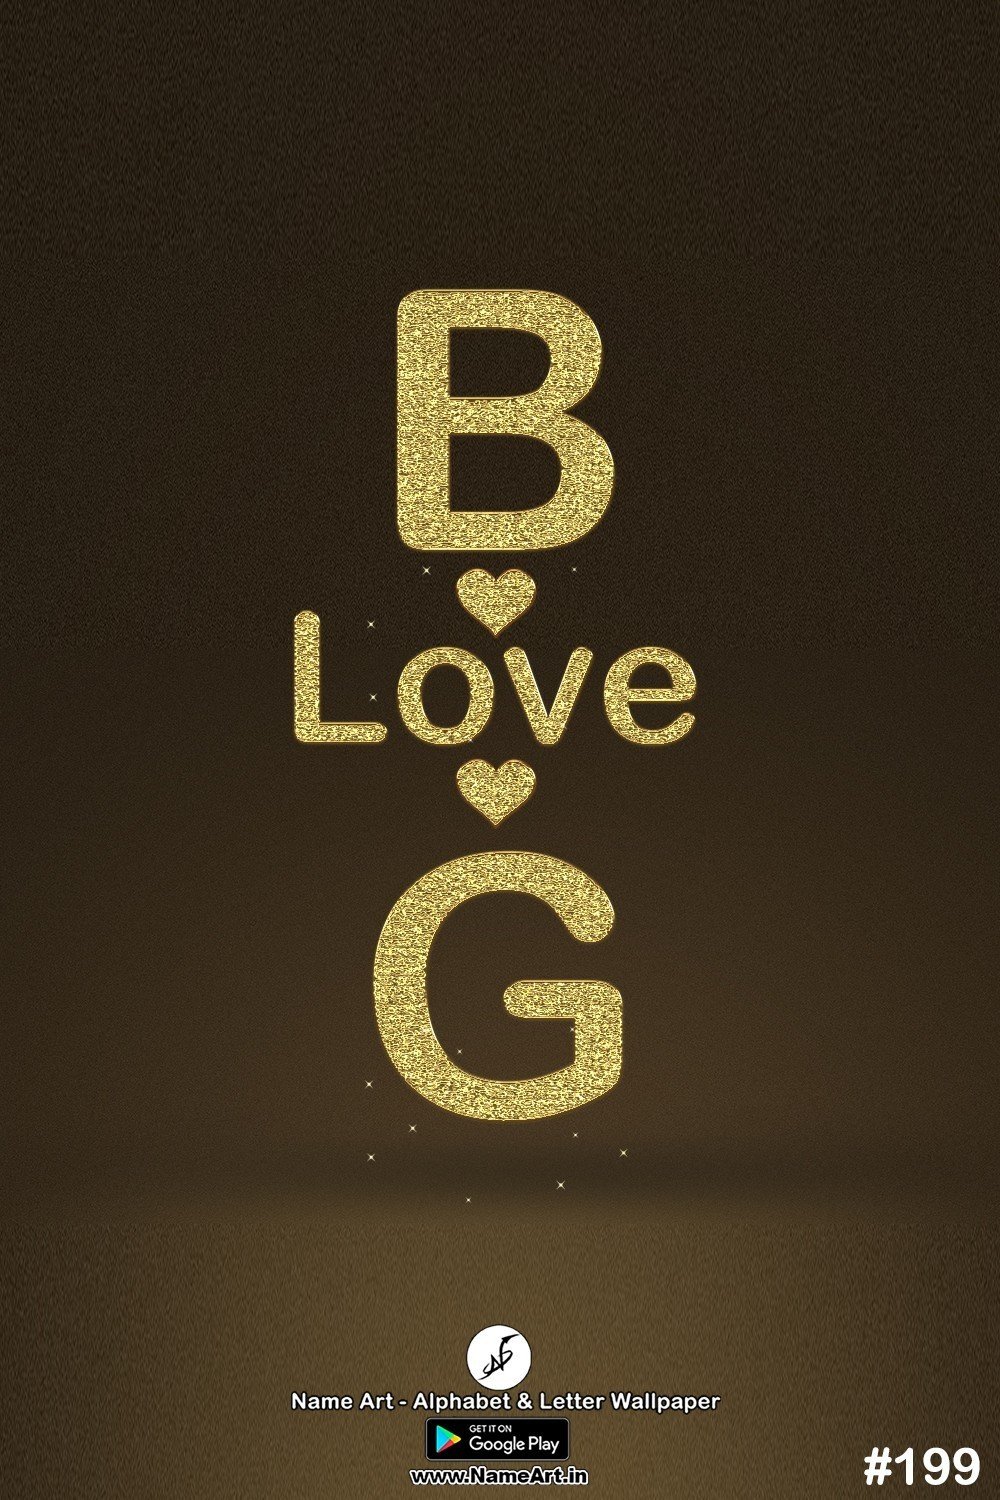 BG | Whatsapp Status DP BG | BG Golden Love Status Cute Couple Whatsapp Status DP !! | New Whatsapp Status DP BG Images |